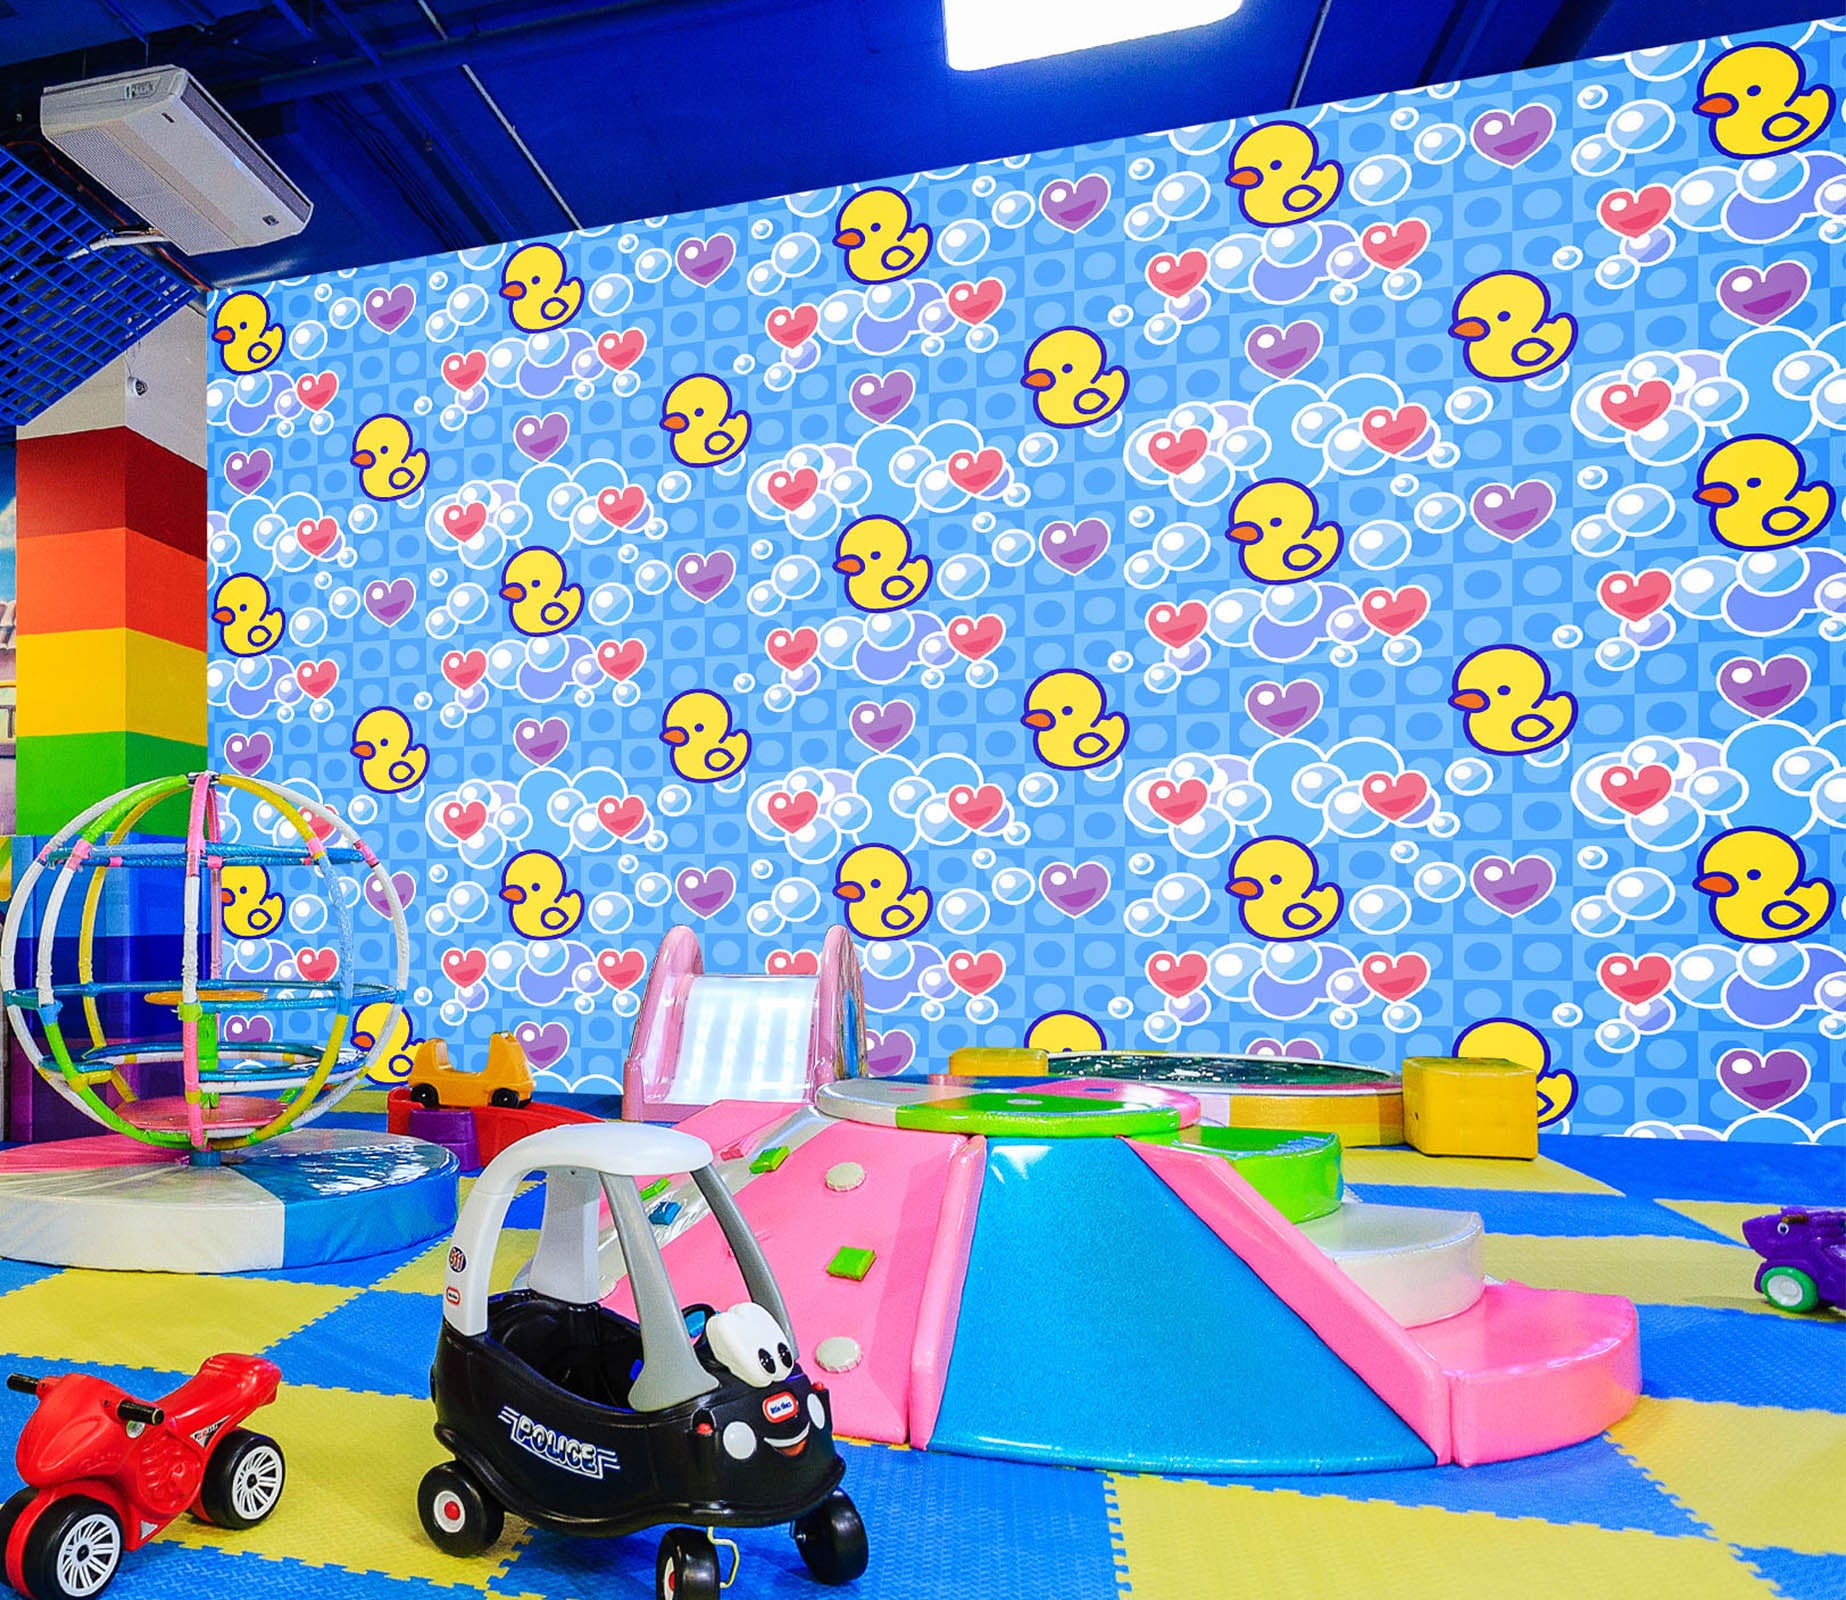 3D Little Yellow Duck Pattern 1412 Indoor Play Centres Wall Murals